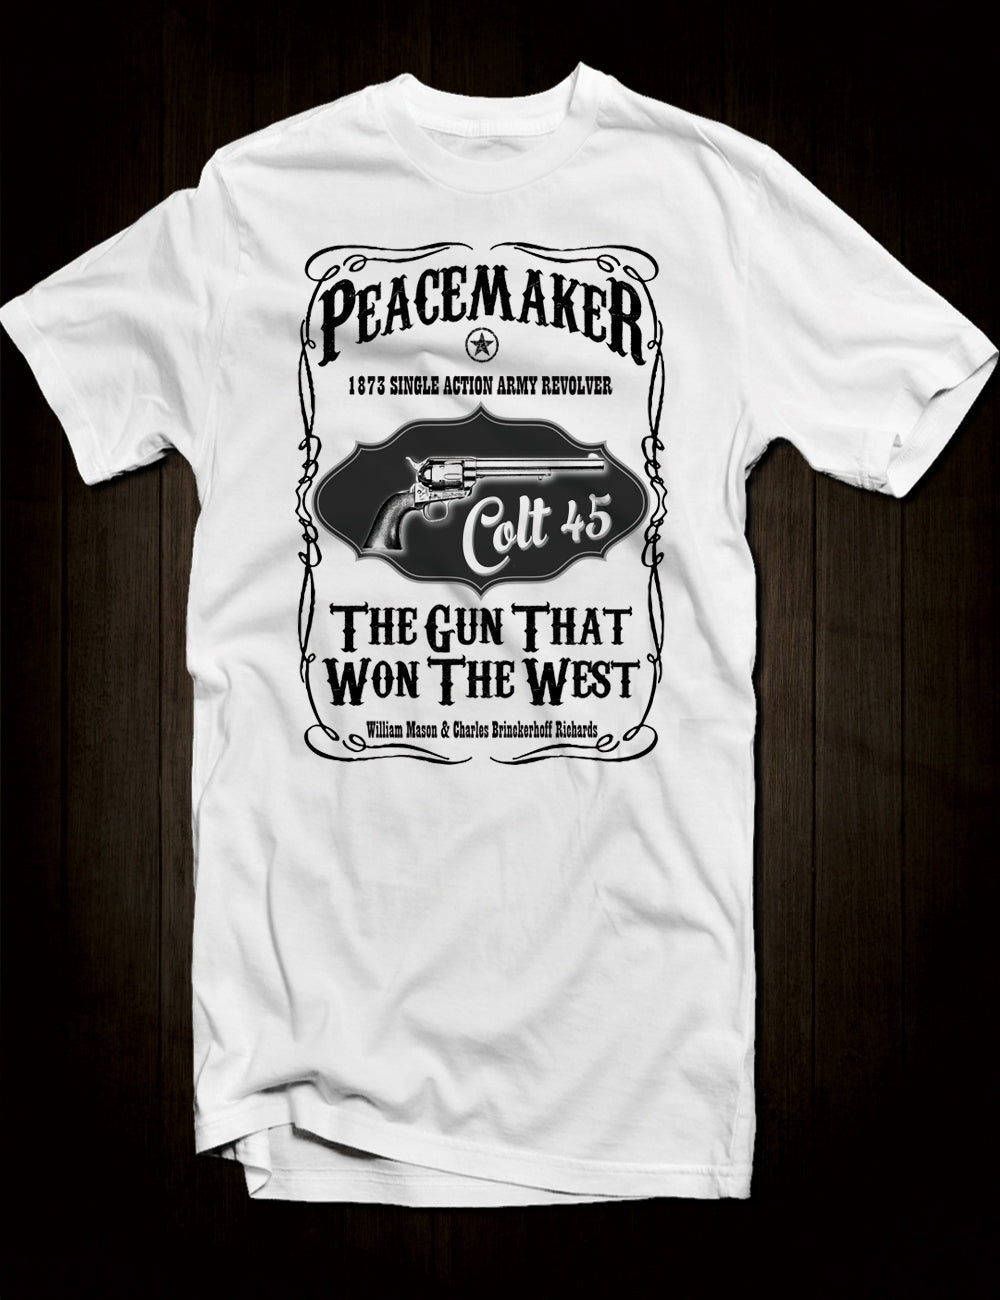 White Wild West Gun T-Shirt Colt 45 Peacemaker